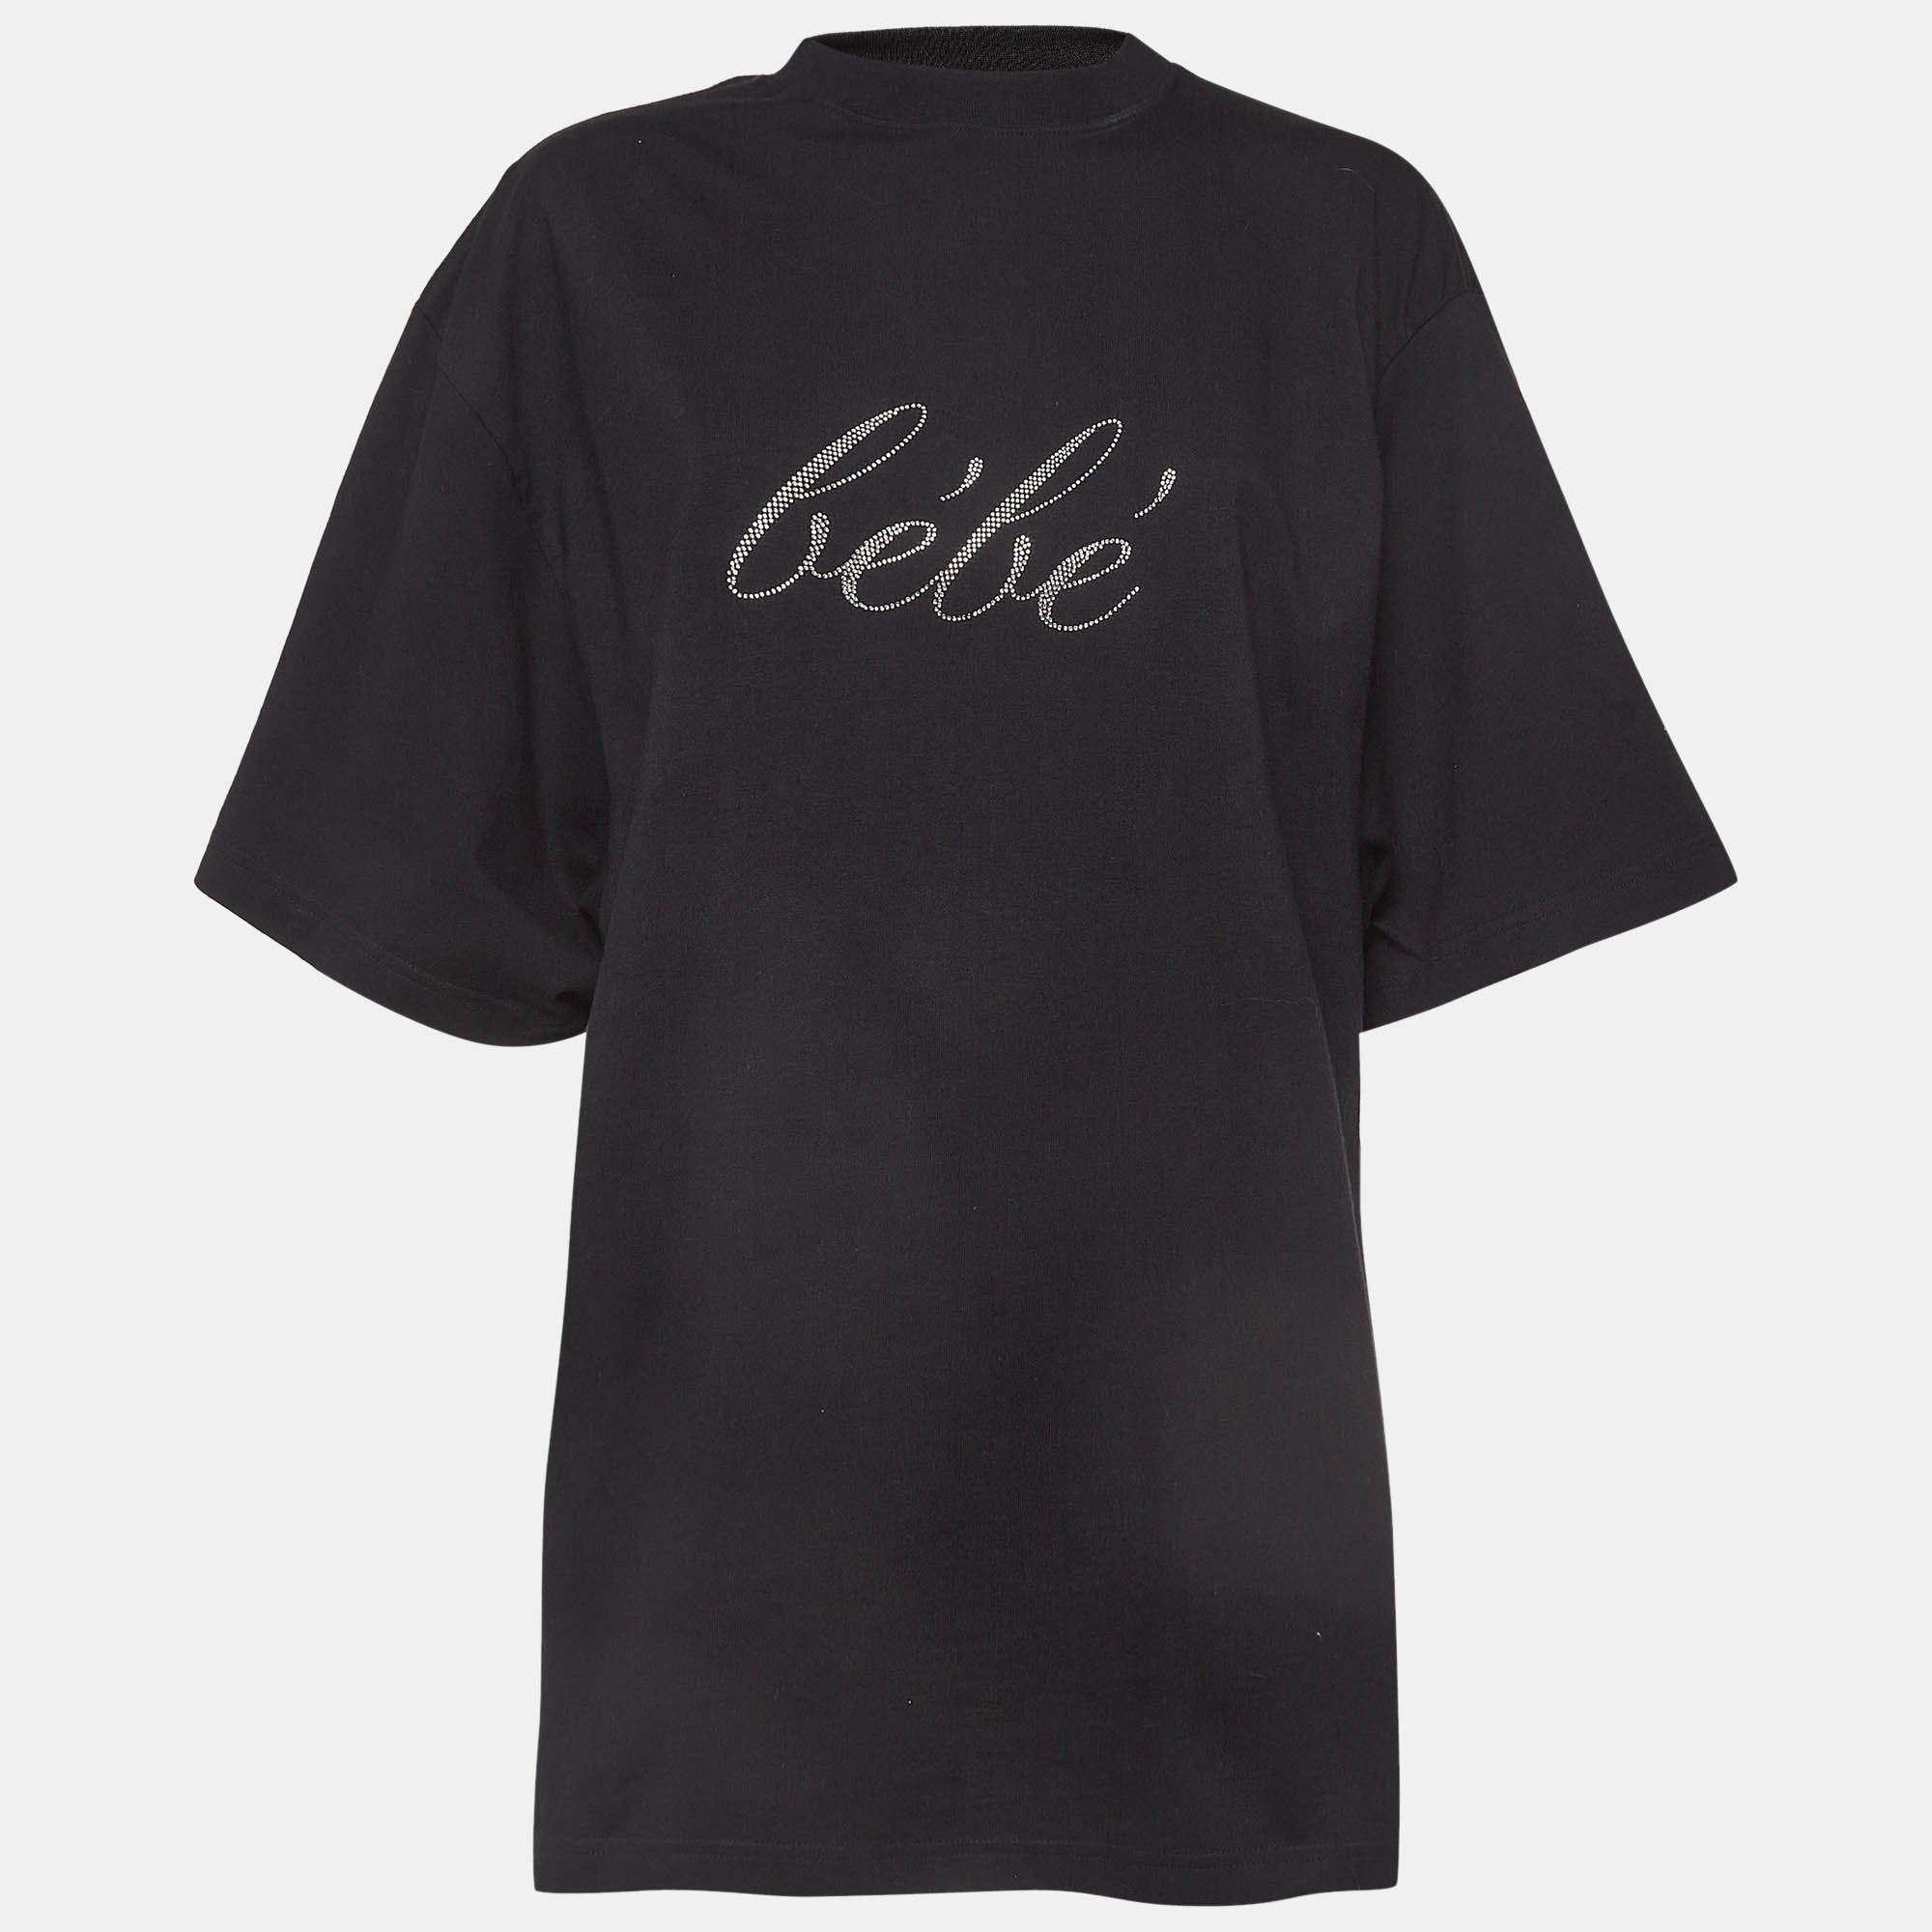 Balenciaga black bebe embellished cotton crew neck t-shirt s